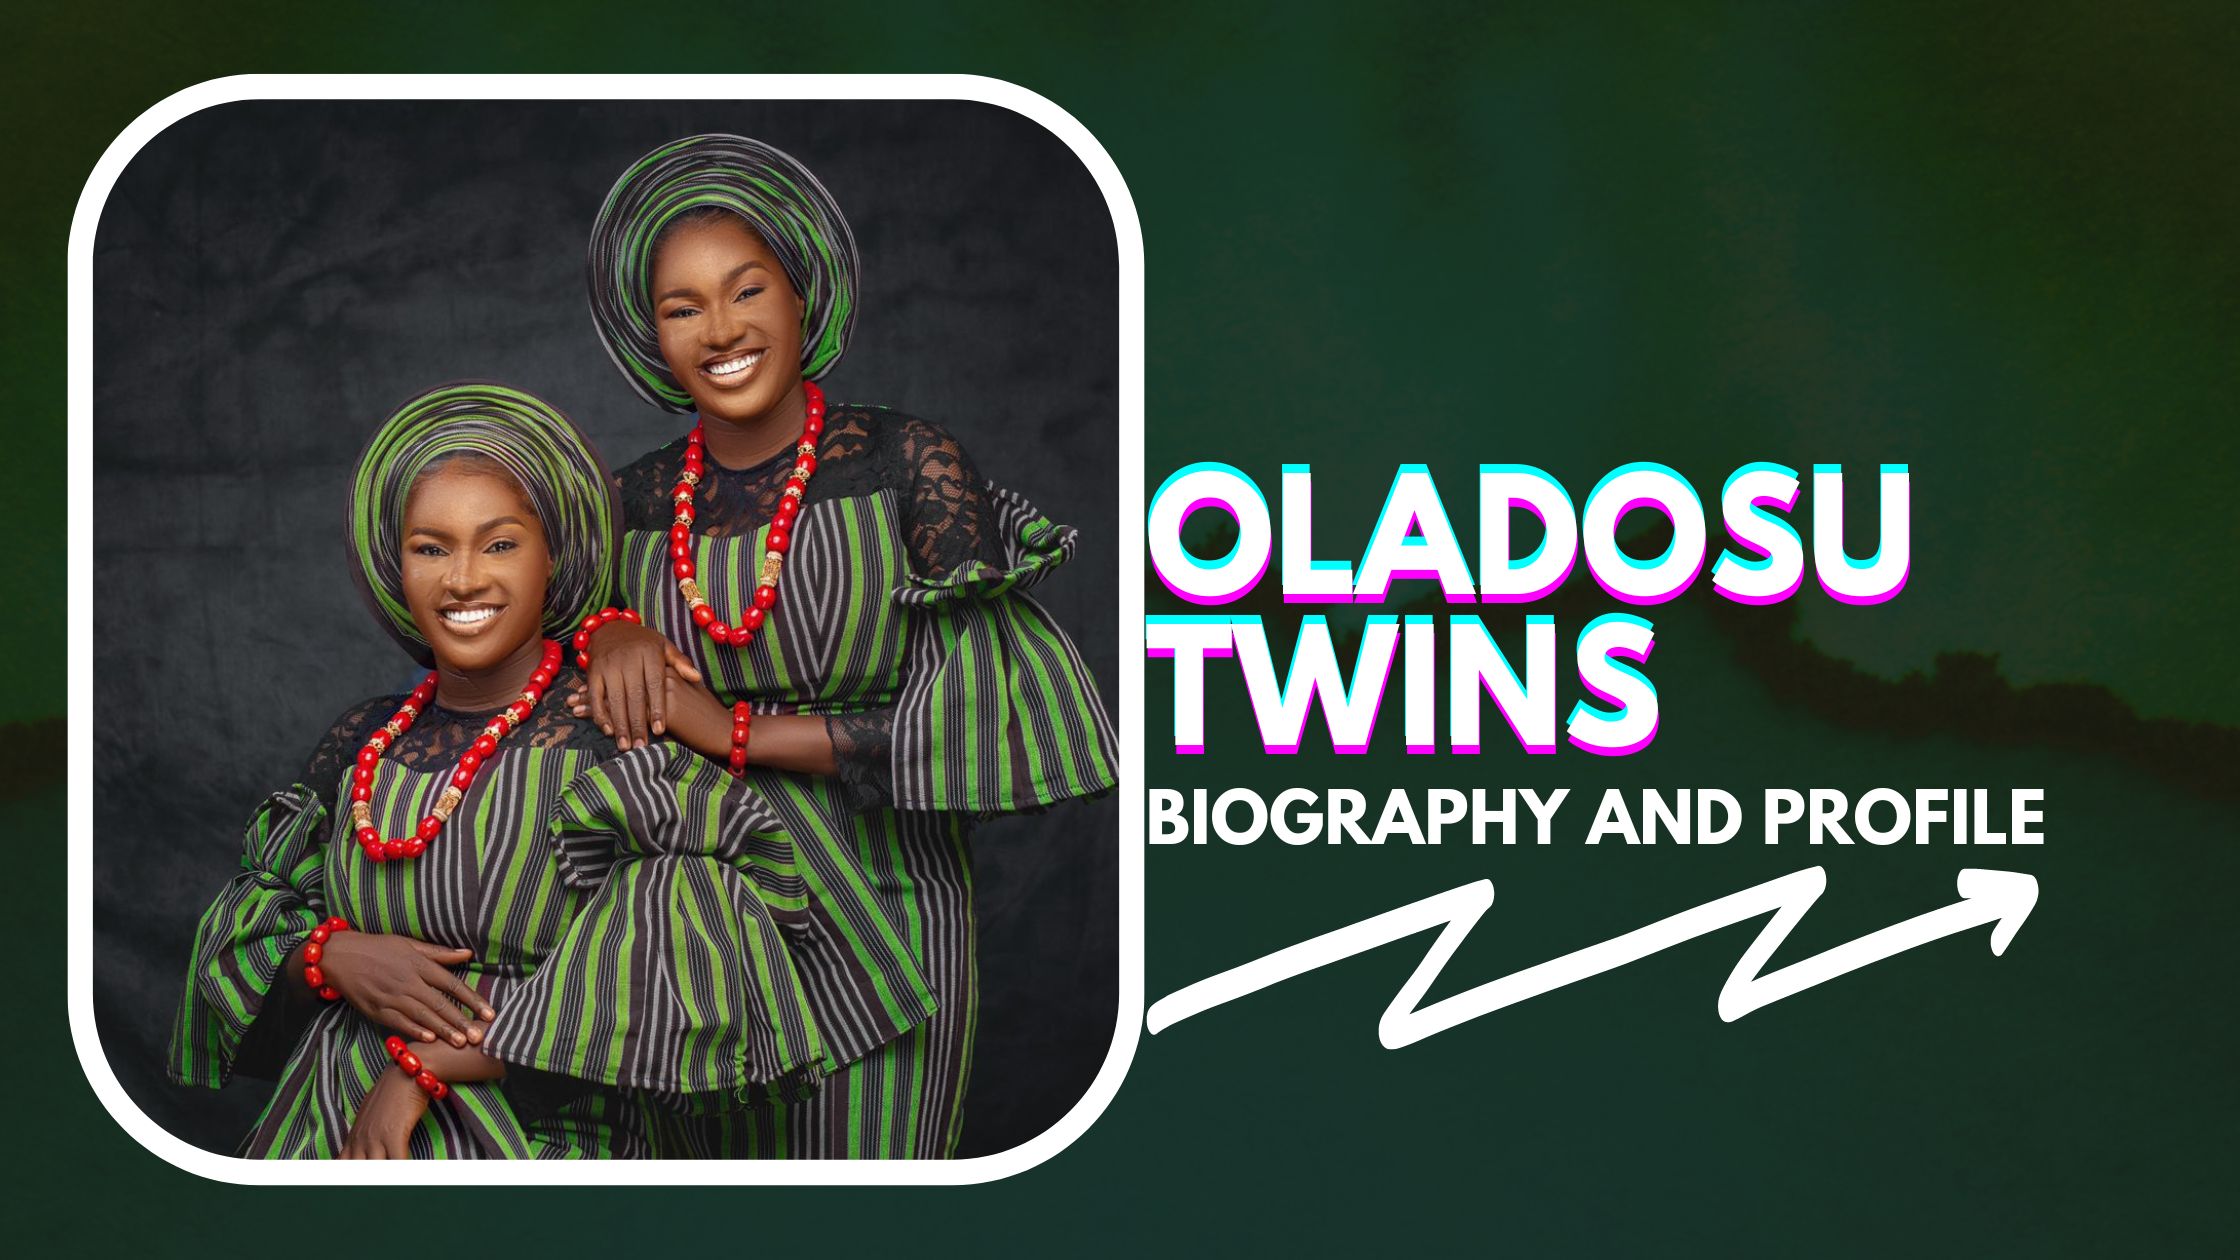 Oladosu Twins Biography and Profile